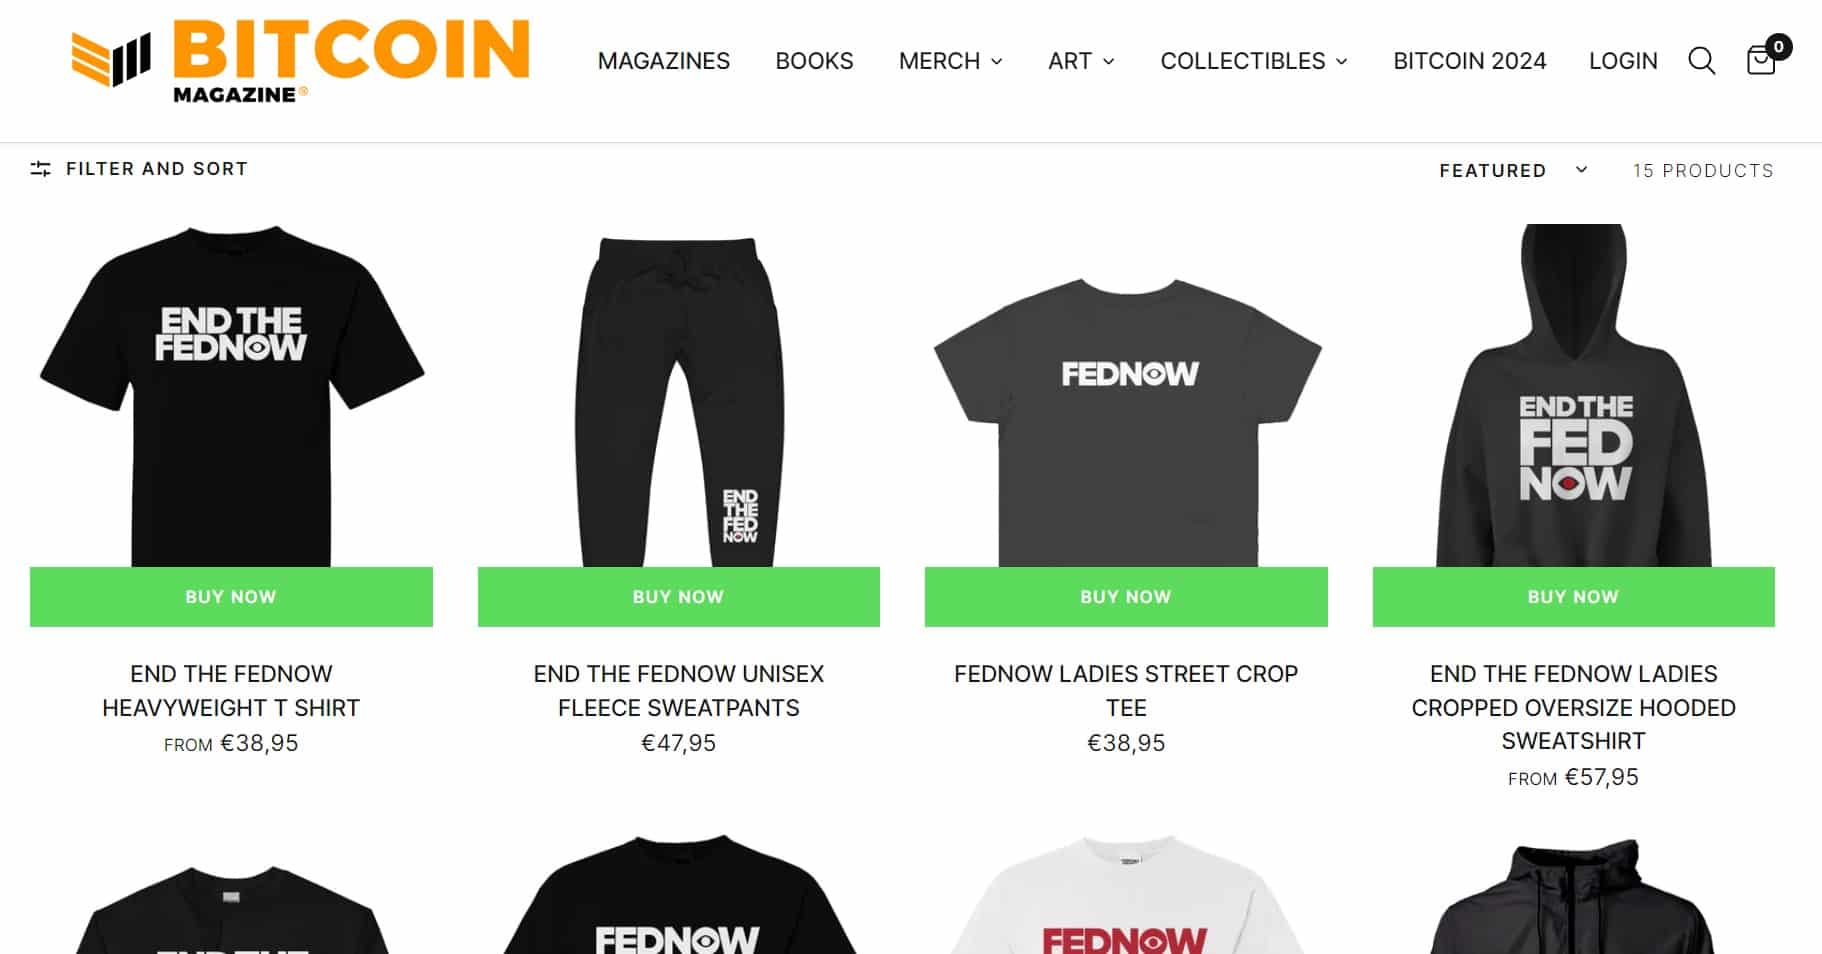 Parody FedNow items sold by Bitcoin magazine